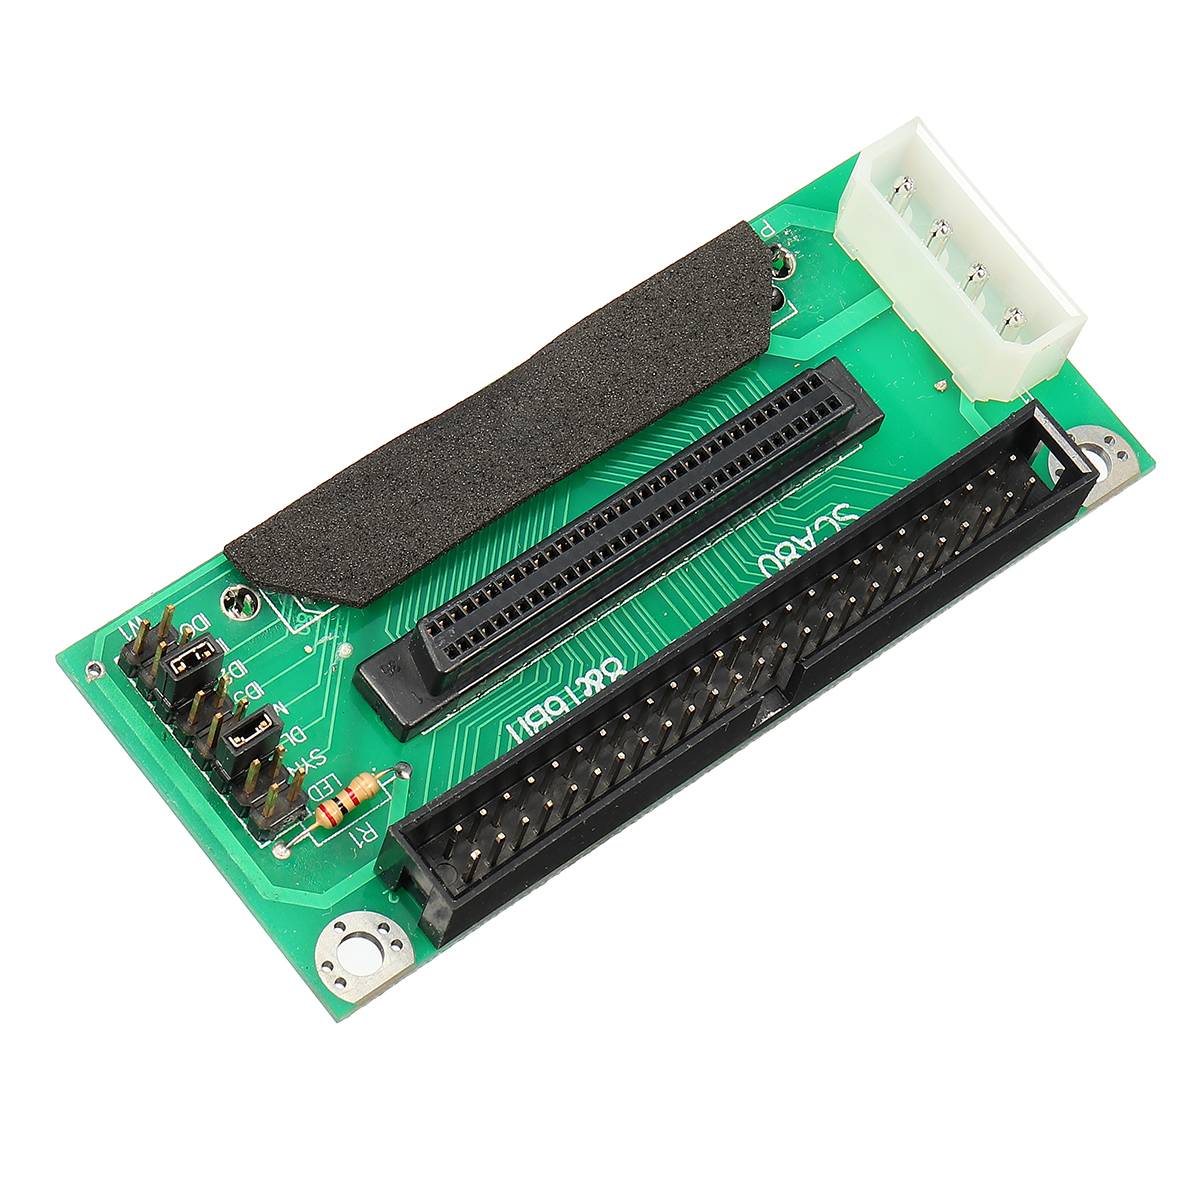 

SCA 80 Pin to 68 Pin 50 Pin IDE Ultra SCSI II/III Переходник для жесткого диска адаптера